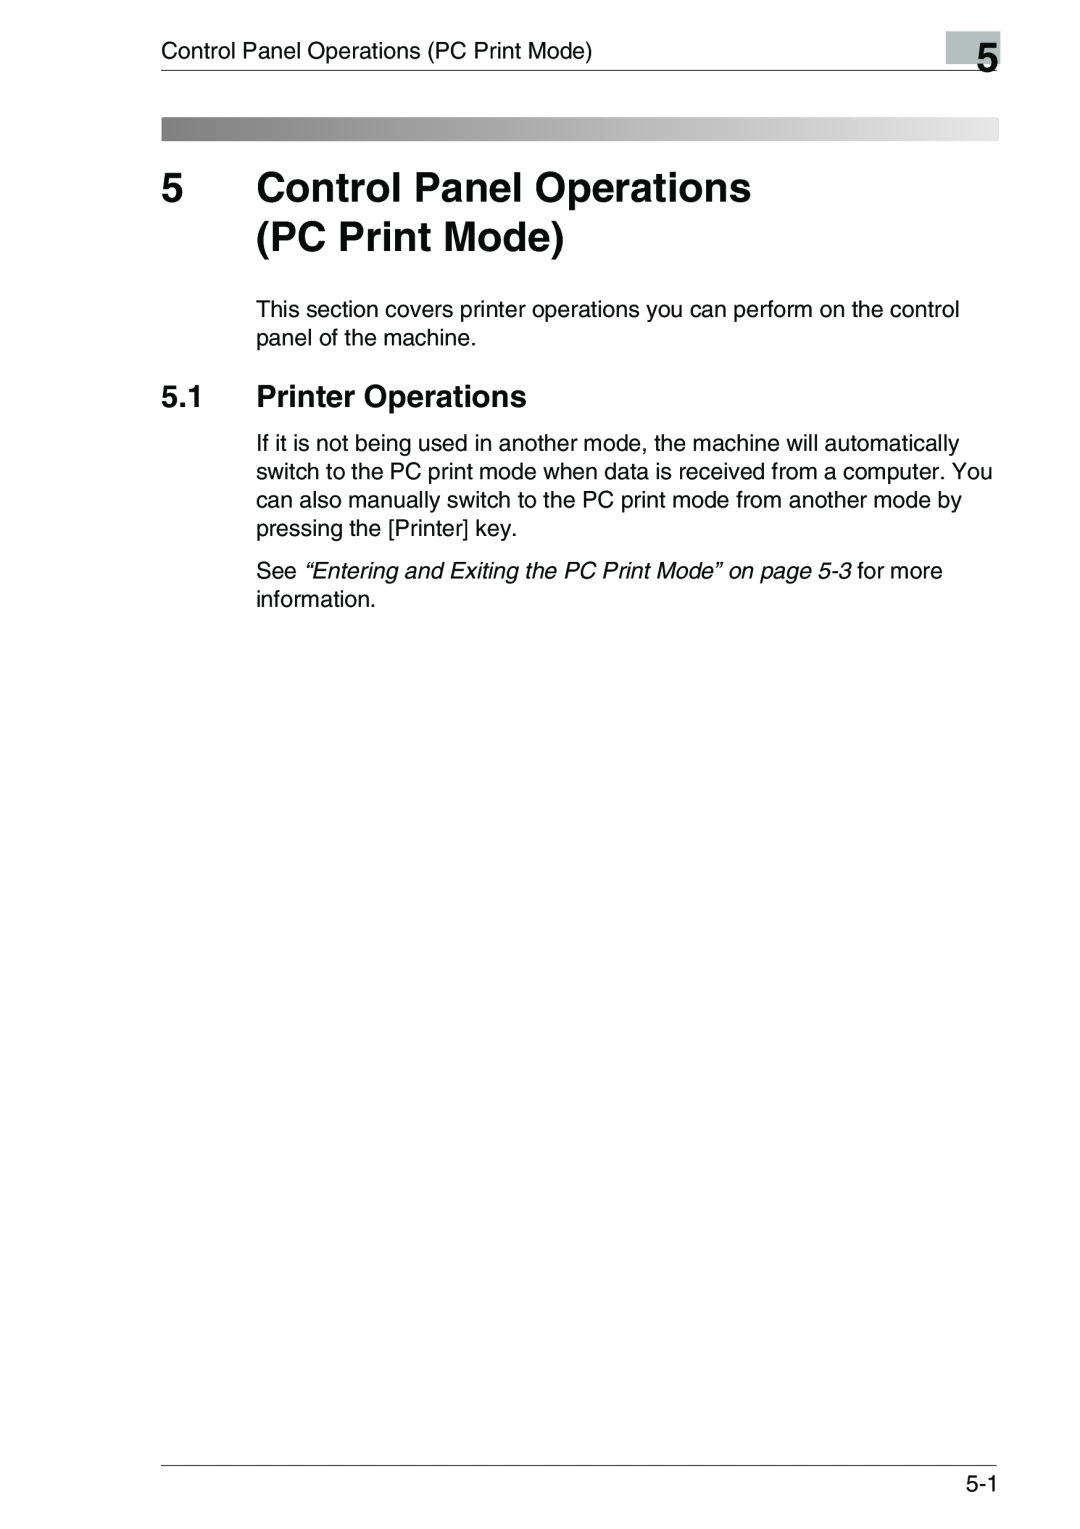 Konica Minolta FAX2900/FAX3900 manual Control Panel Operations PC Print Mode, Printer Operations 